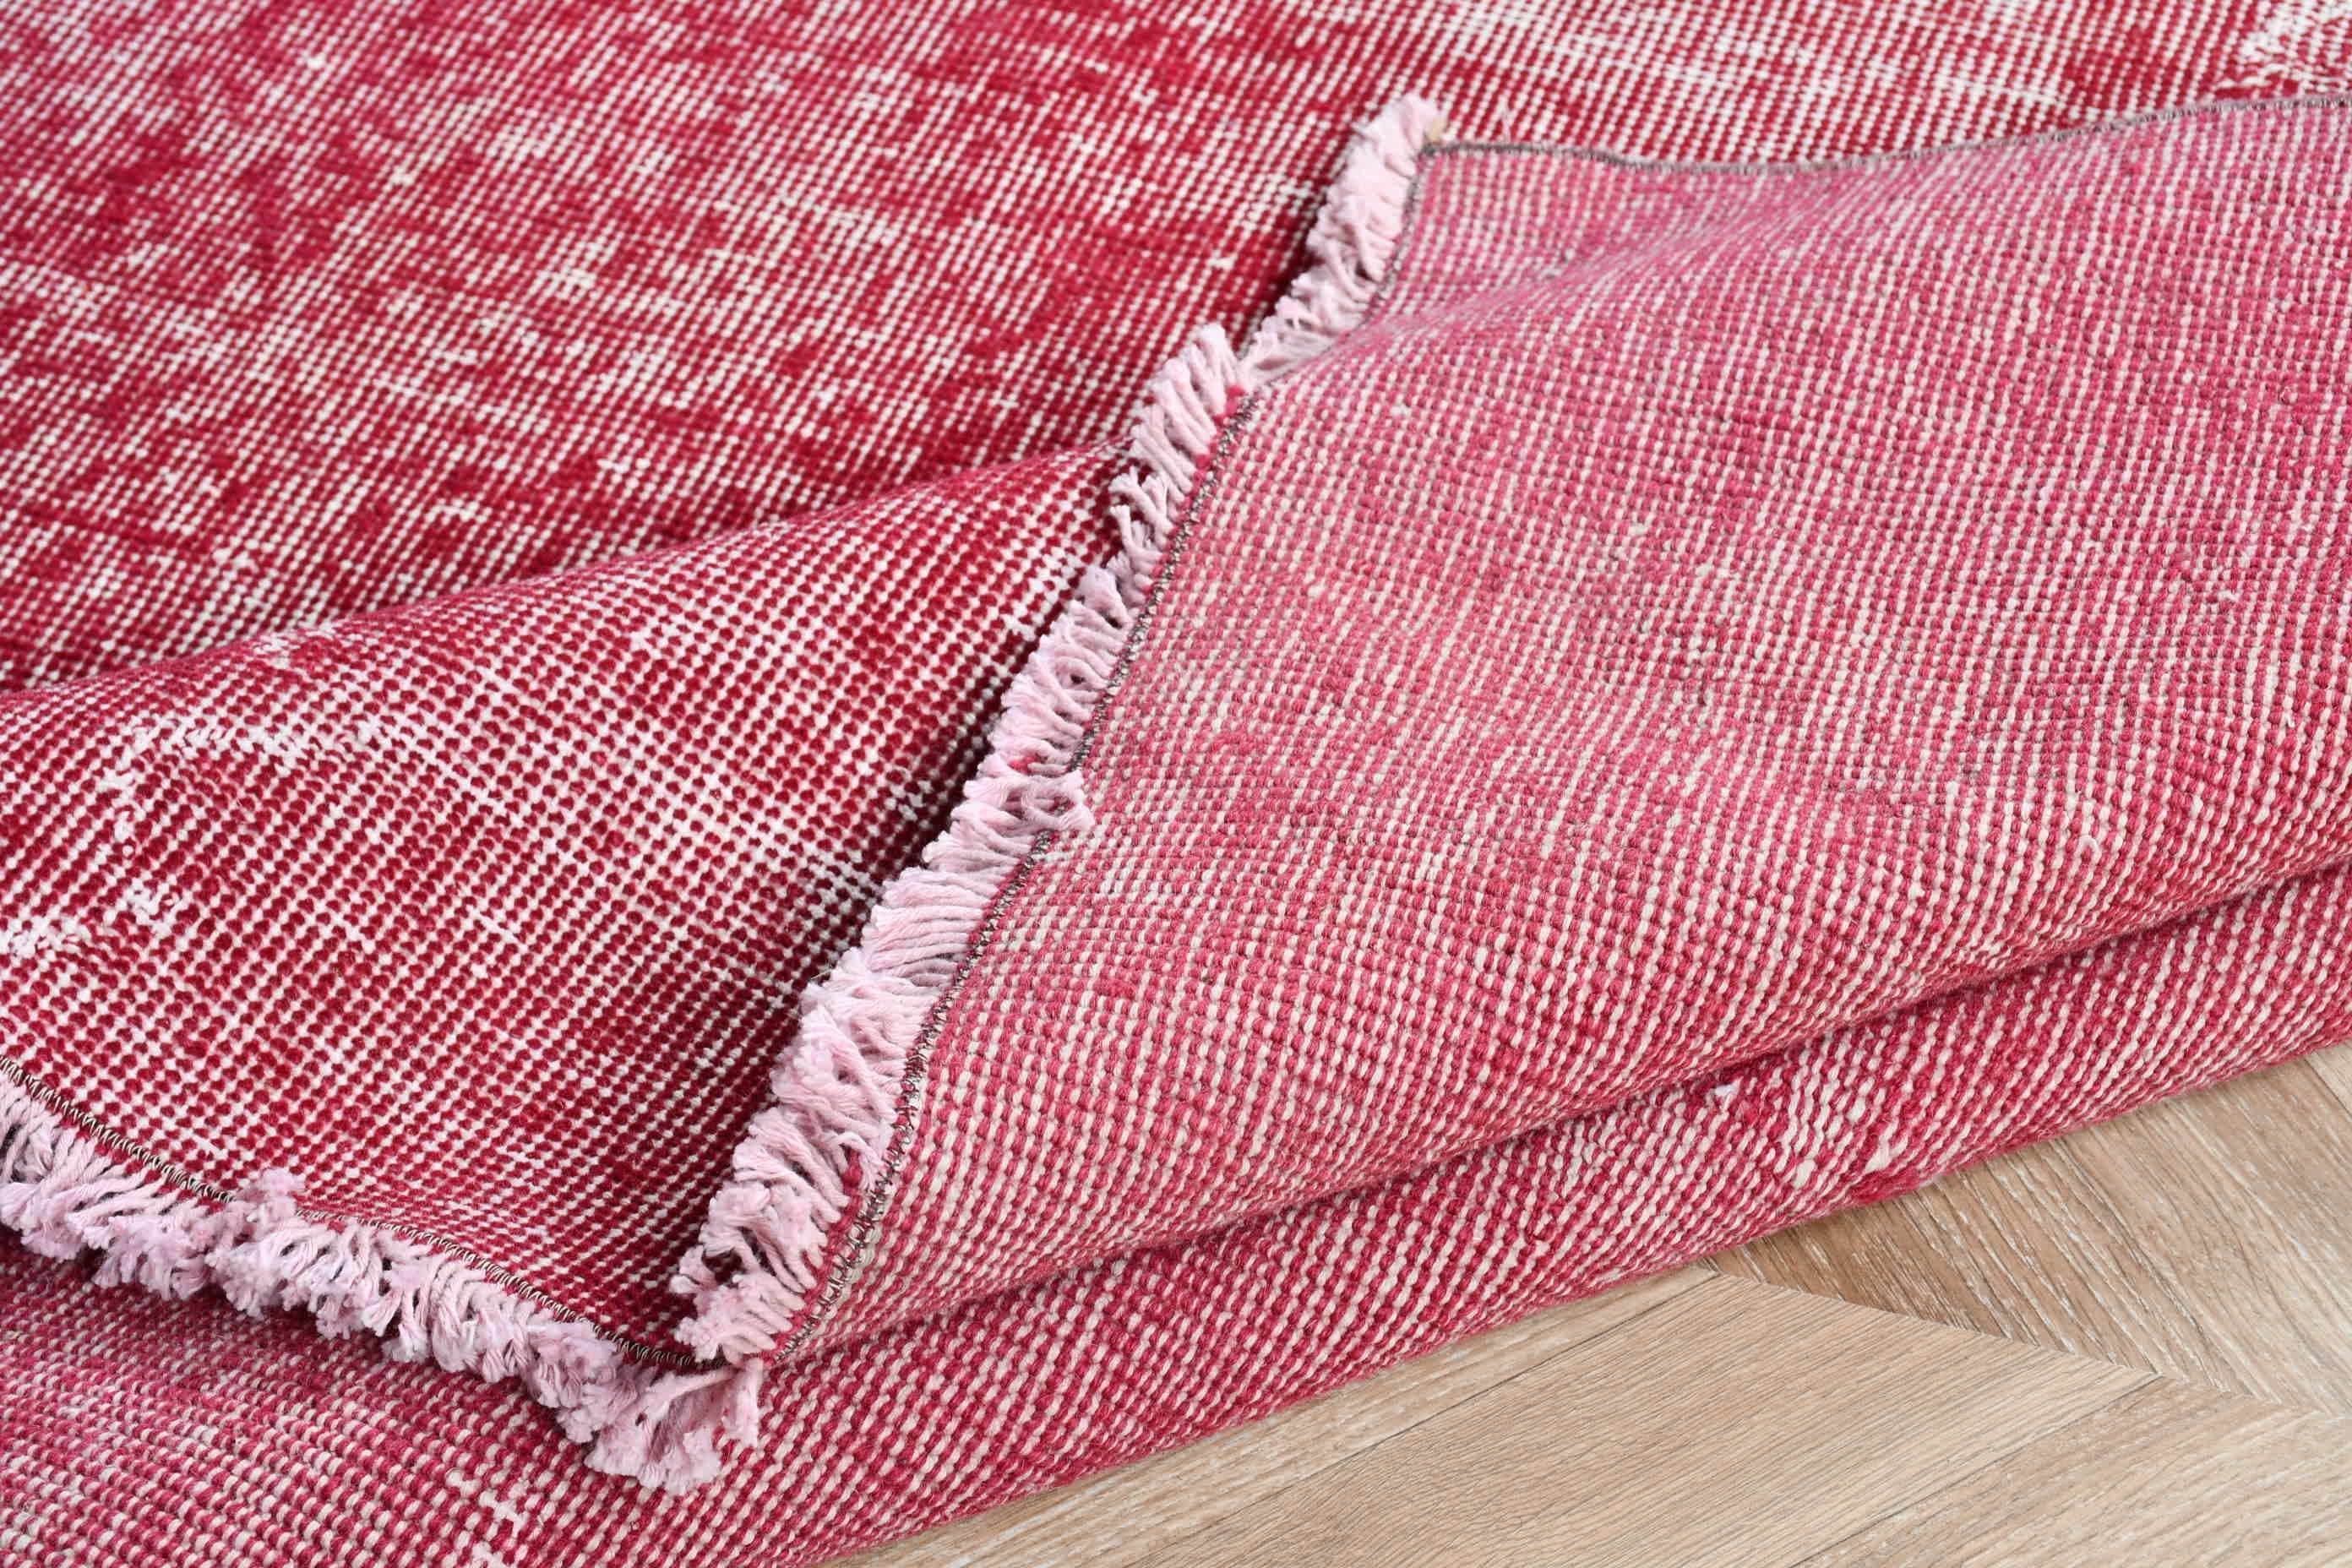 Turkish Rugs, Vintage Rug, Rugs for Dining Room, Red Oriental Rug, Dining Room Rug, Bedroom Rug, Home Decor Rug, 5.1x8.2 ft Large Rug